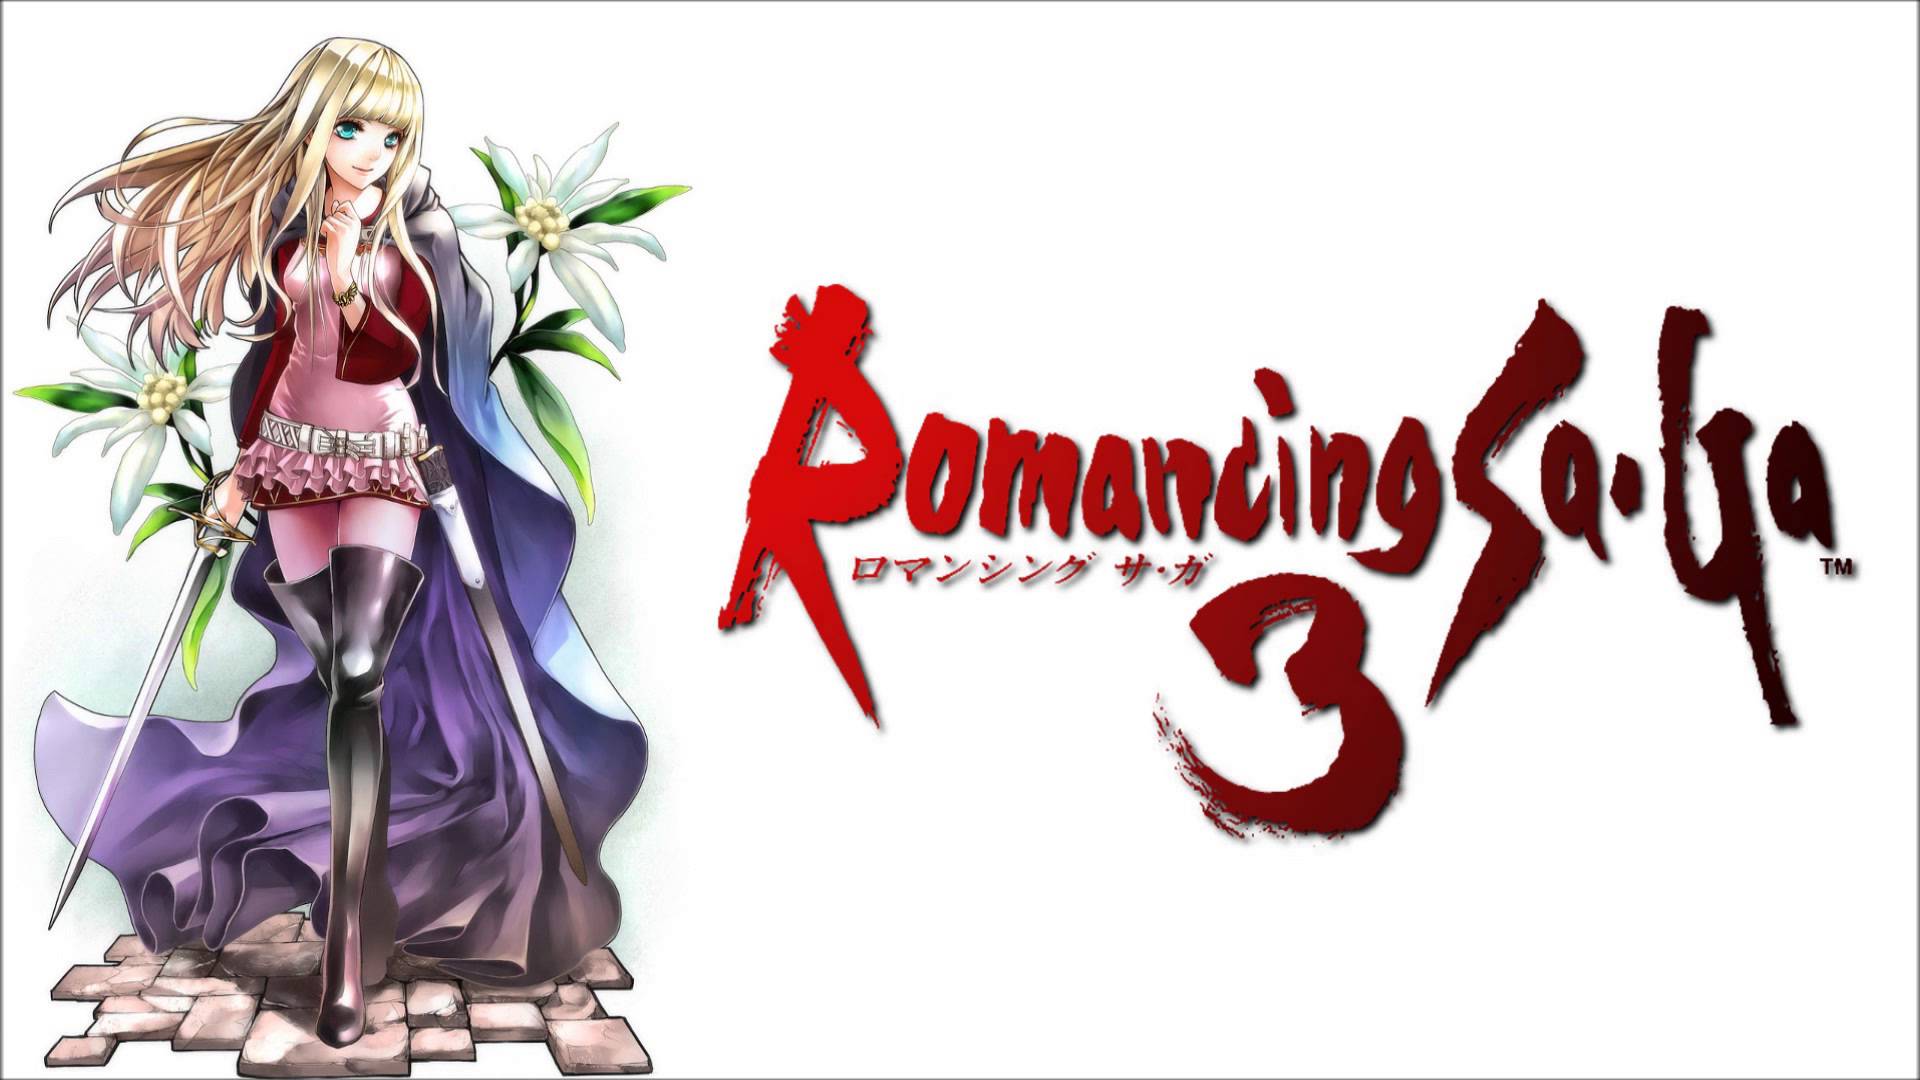 download romancing saga 3 steam